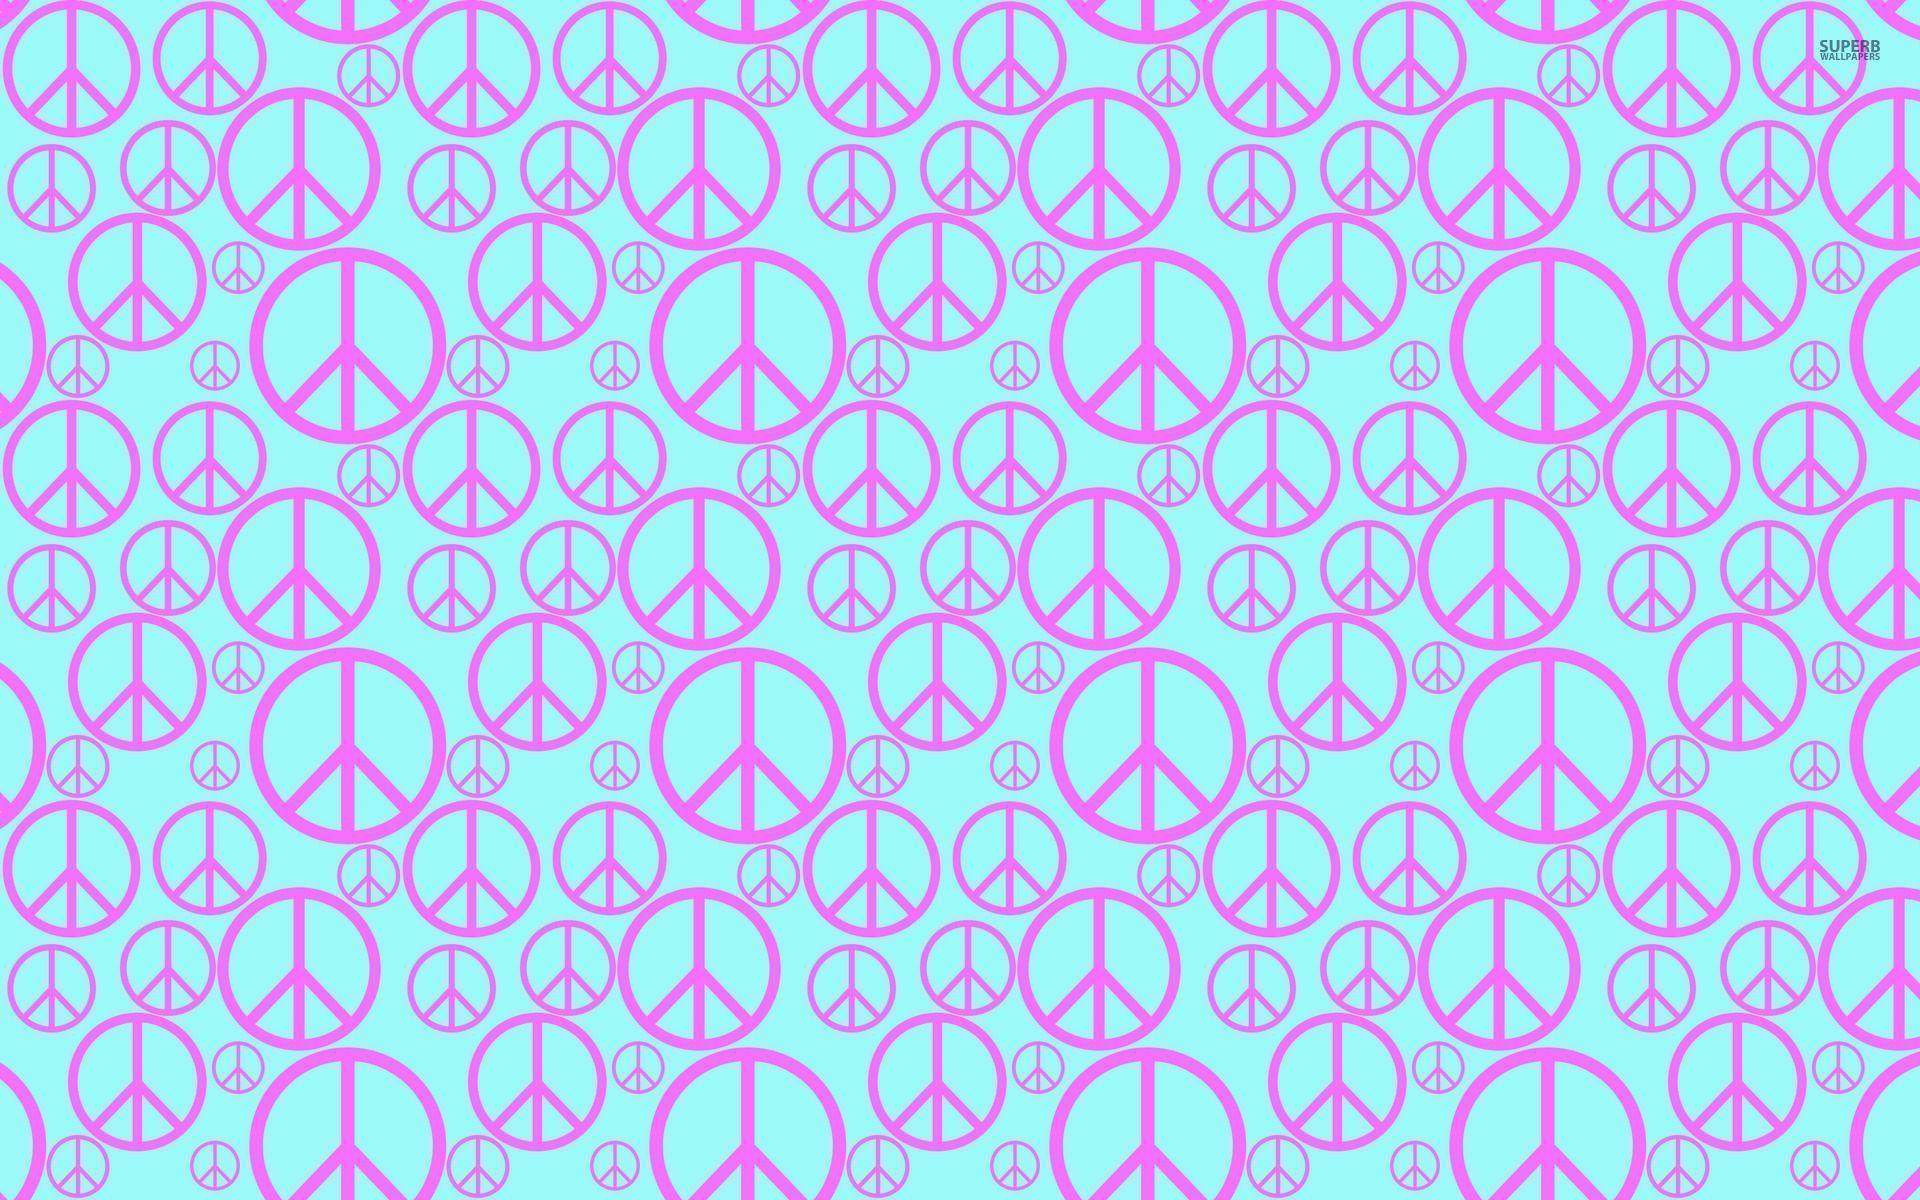 Peace symbol pattern wallpaper wallpaper - #